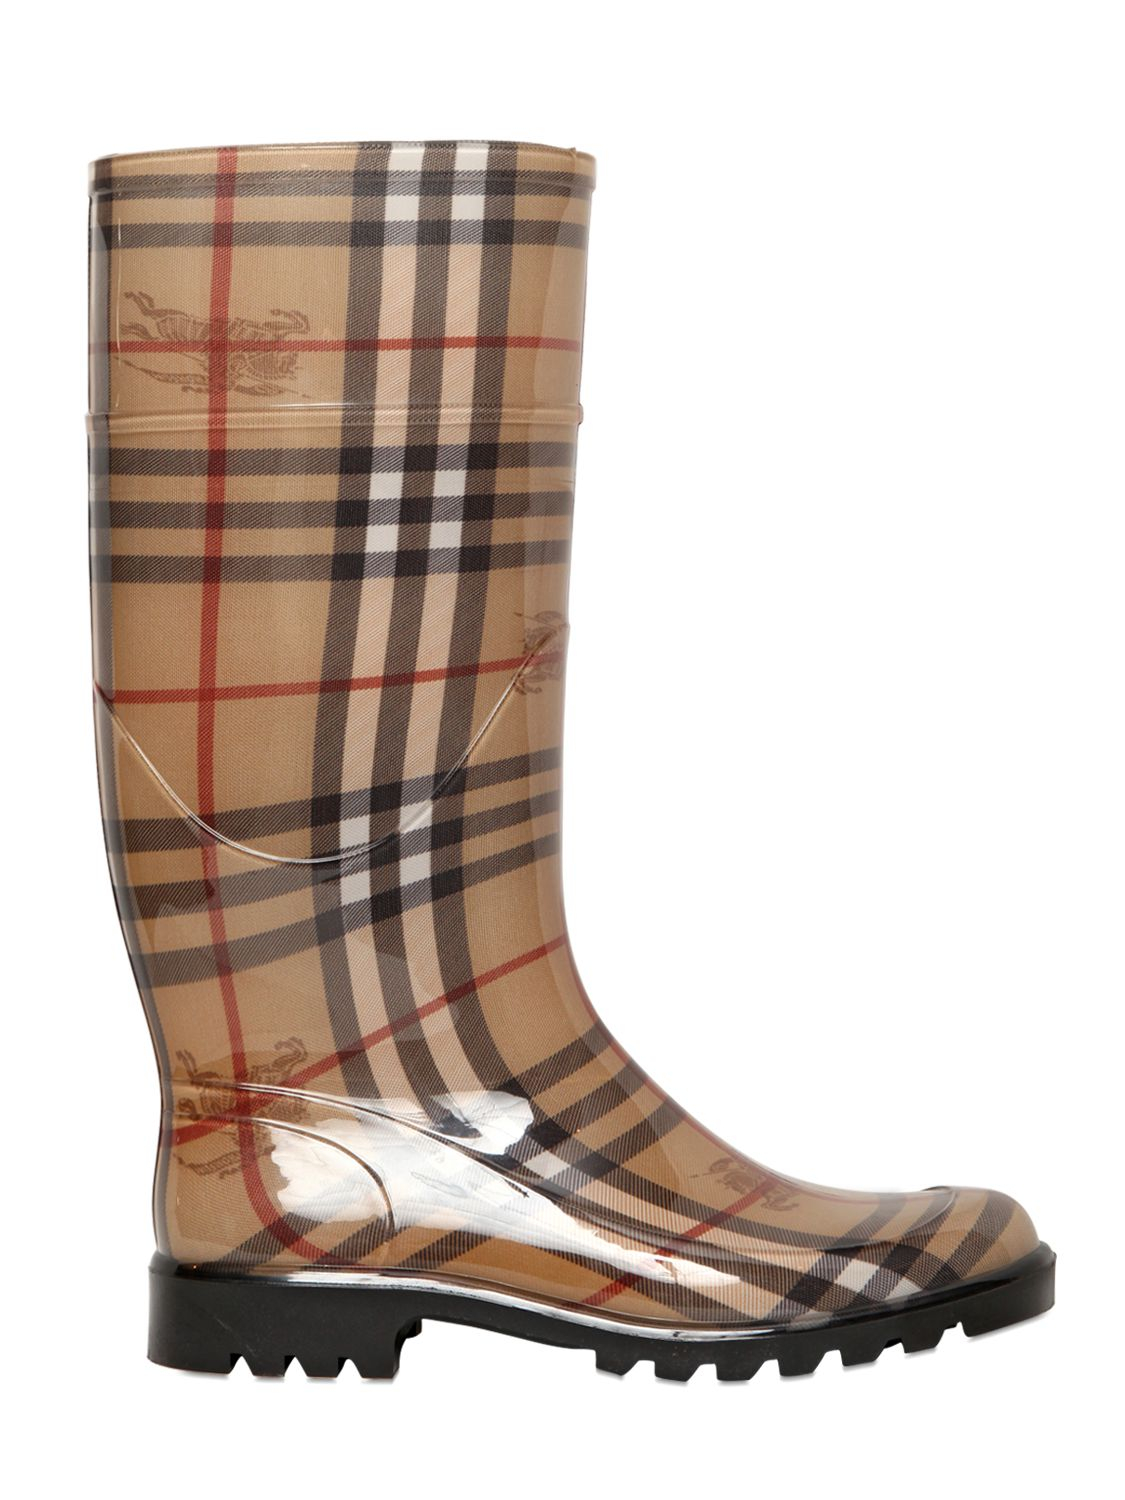 Burberry 20mm Haymarket Rubber Rain Boots in Brown - Lyst